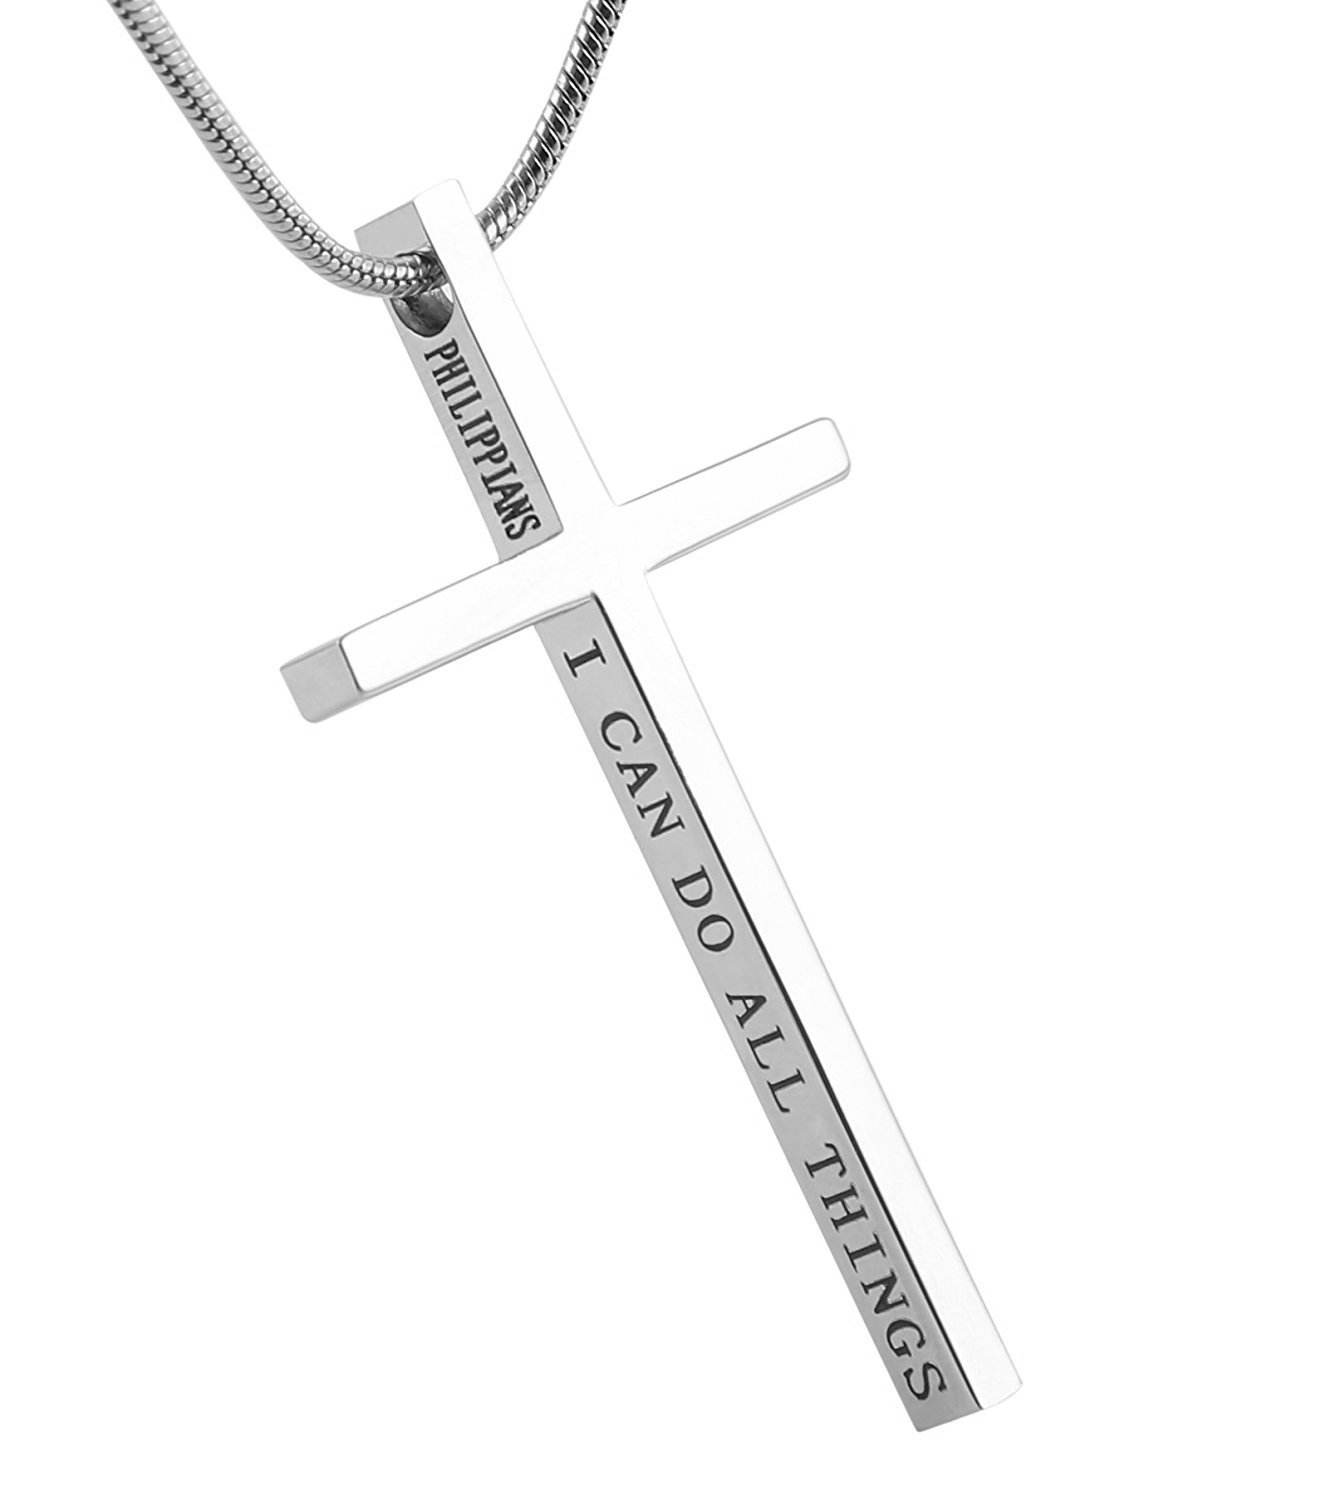 HZMAN Philippians 4:13 Cross Pendant STRENGTH Bible Verse Stainless Steel Necklace